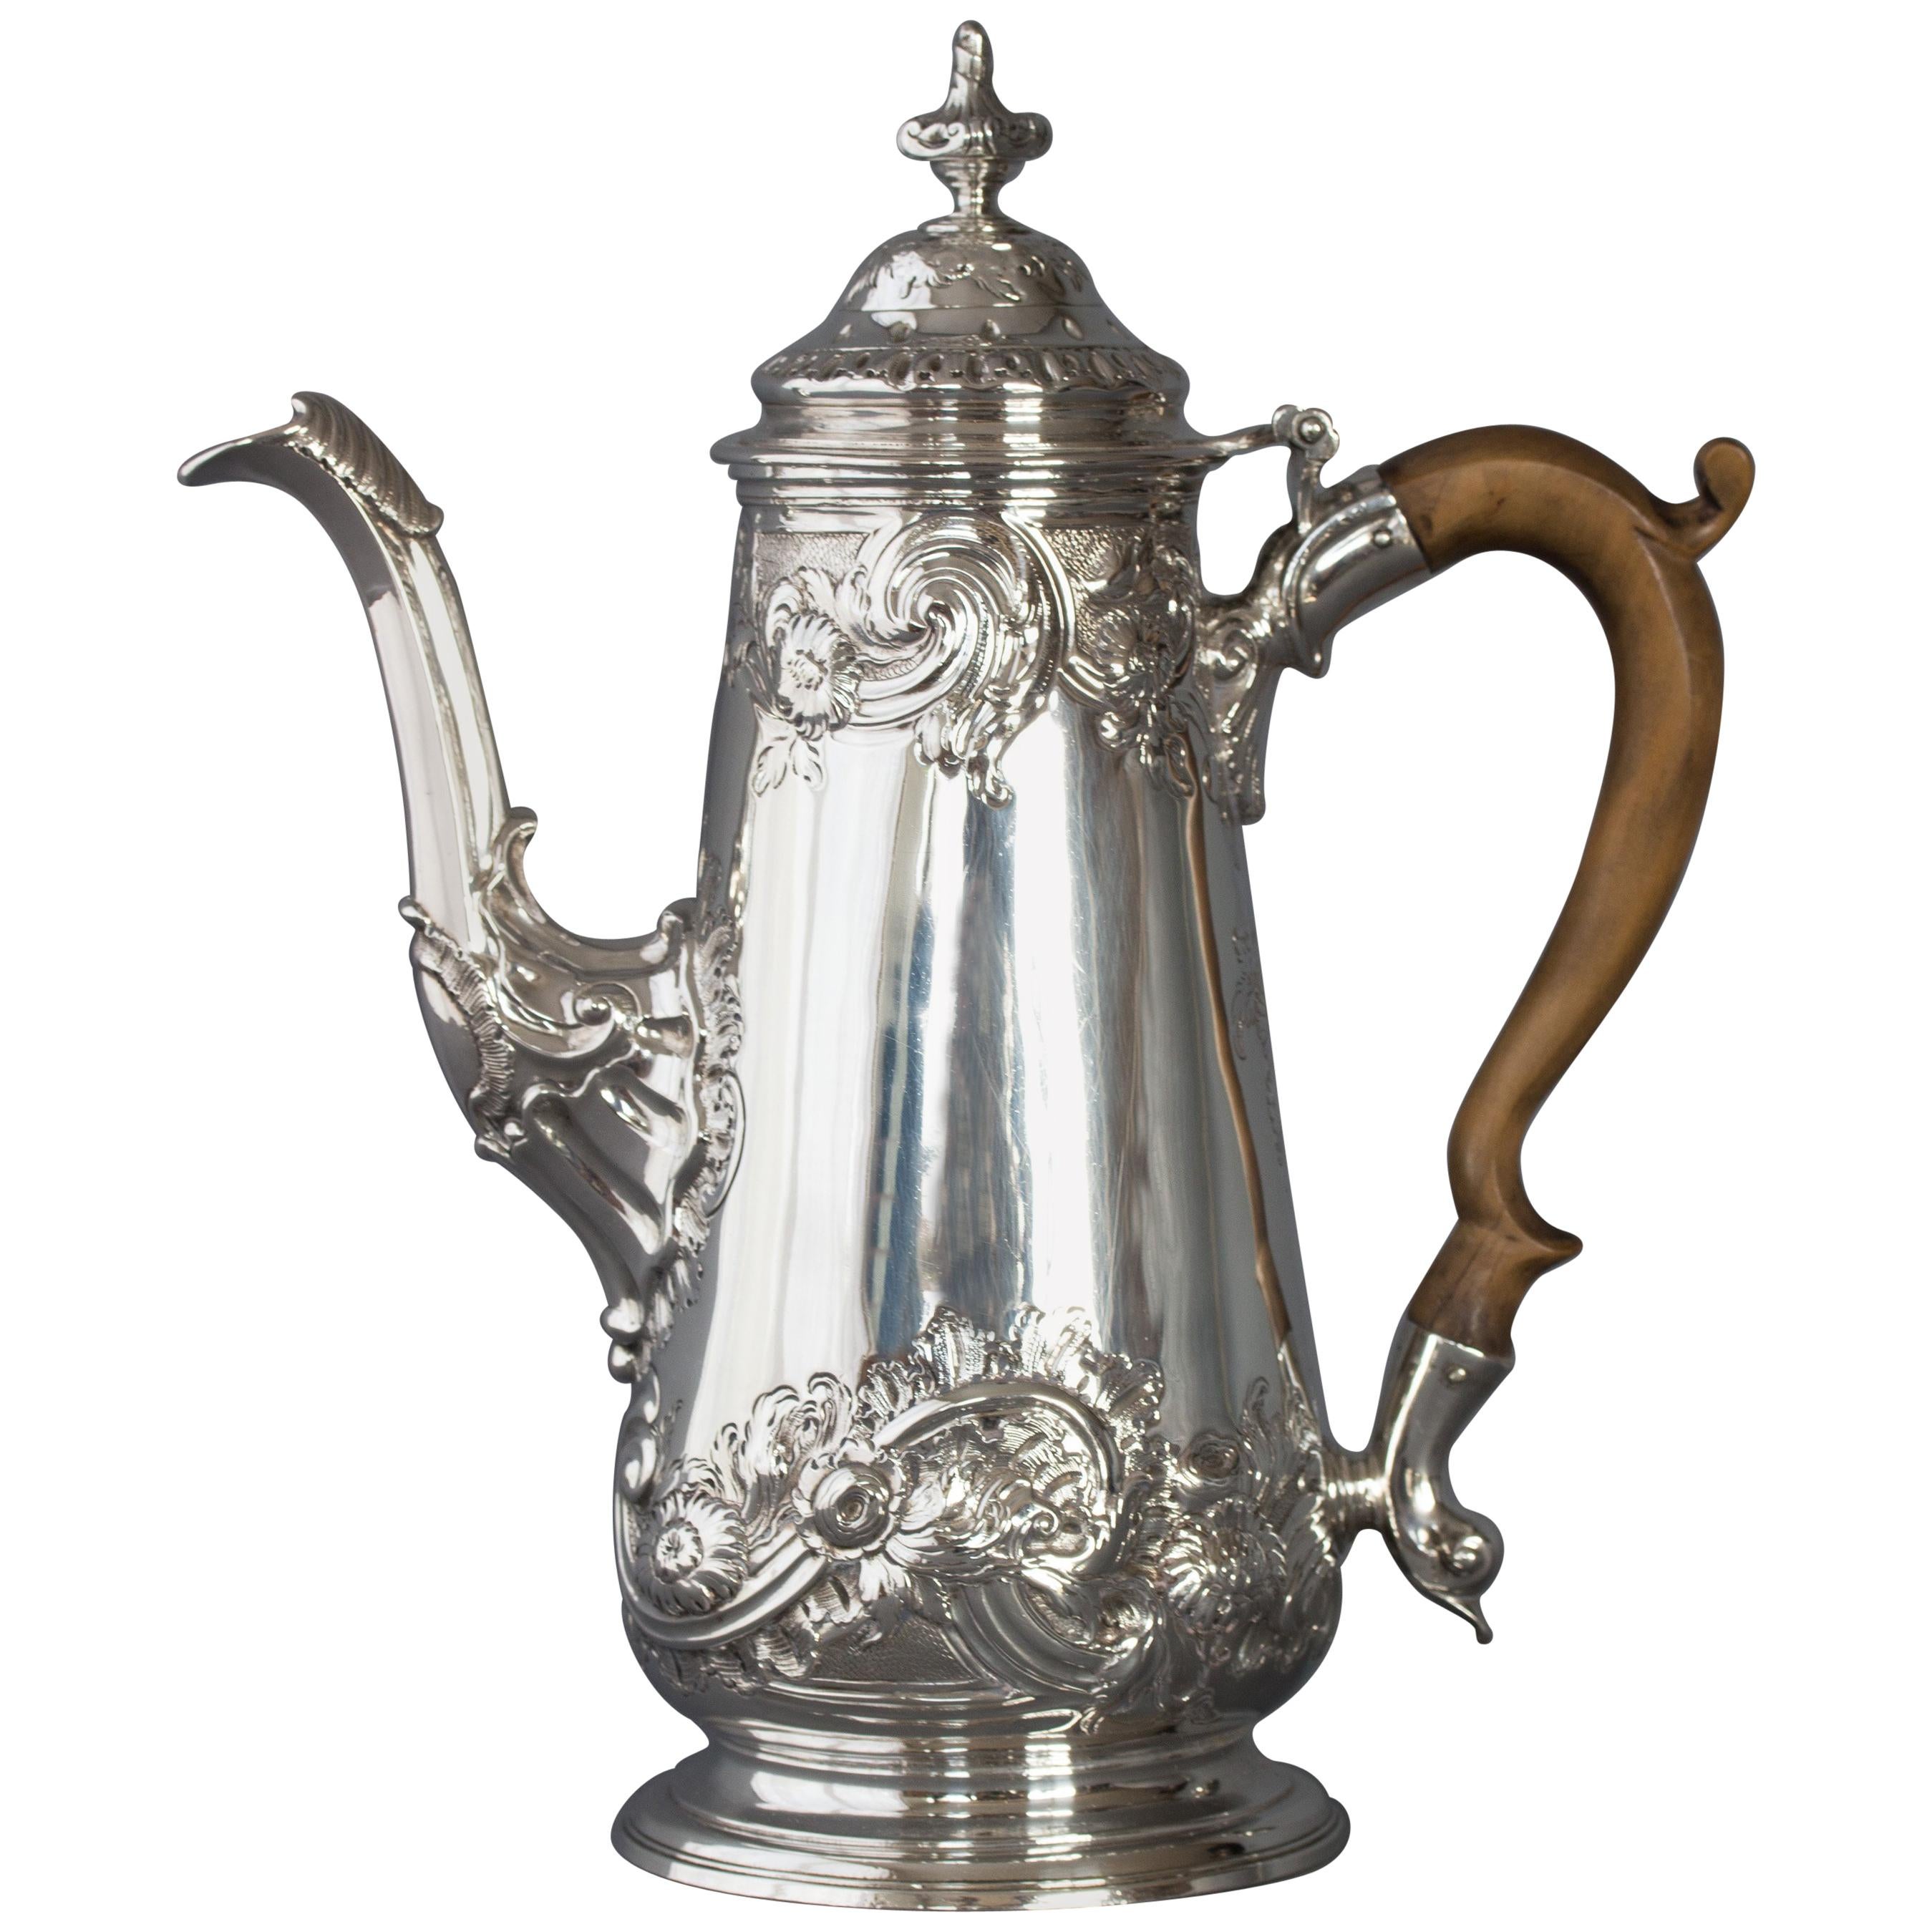 George II Silver Coffee Pot, London 1752 by Samuel Courtauld